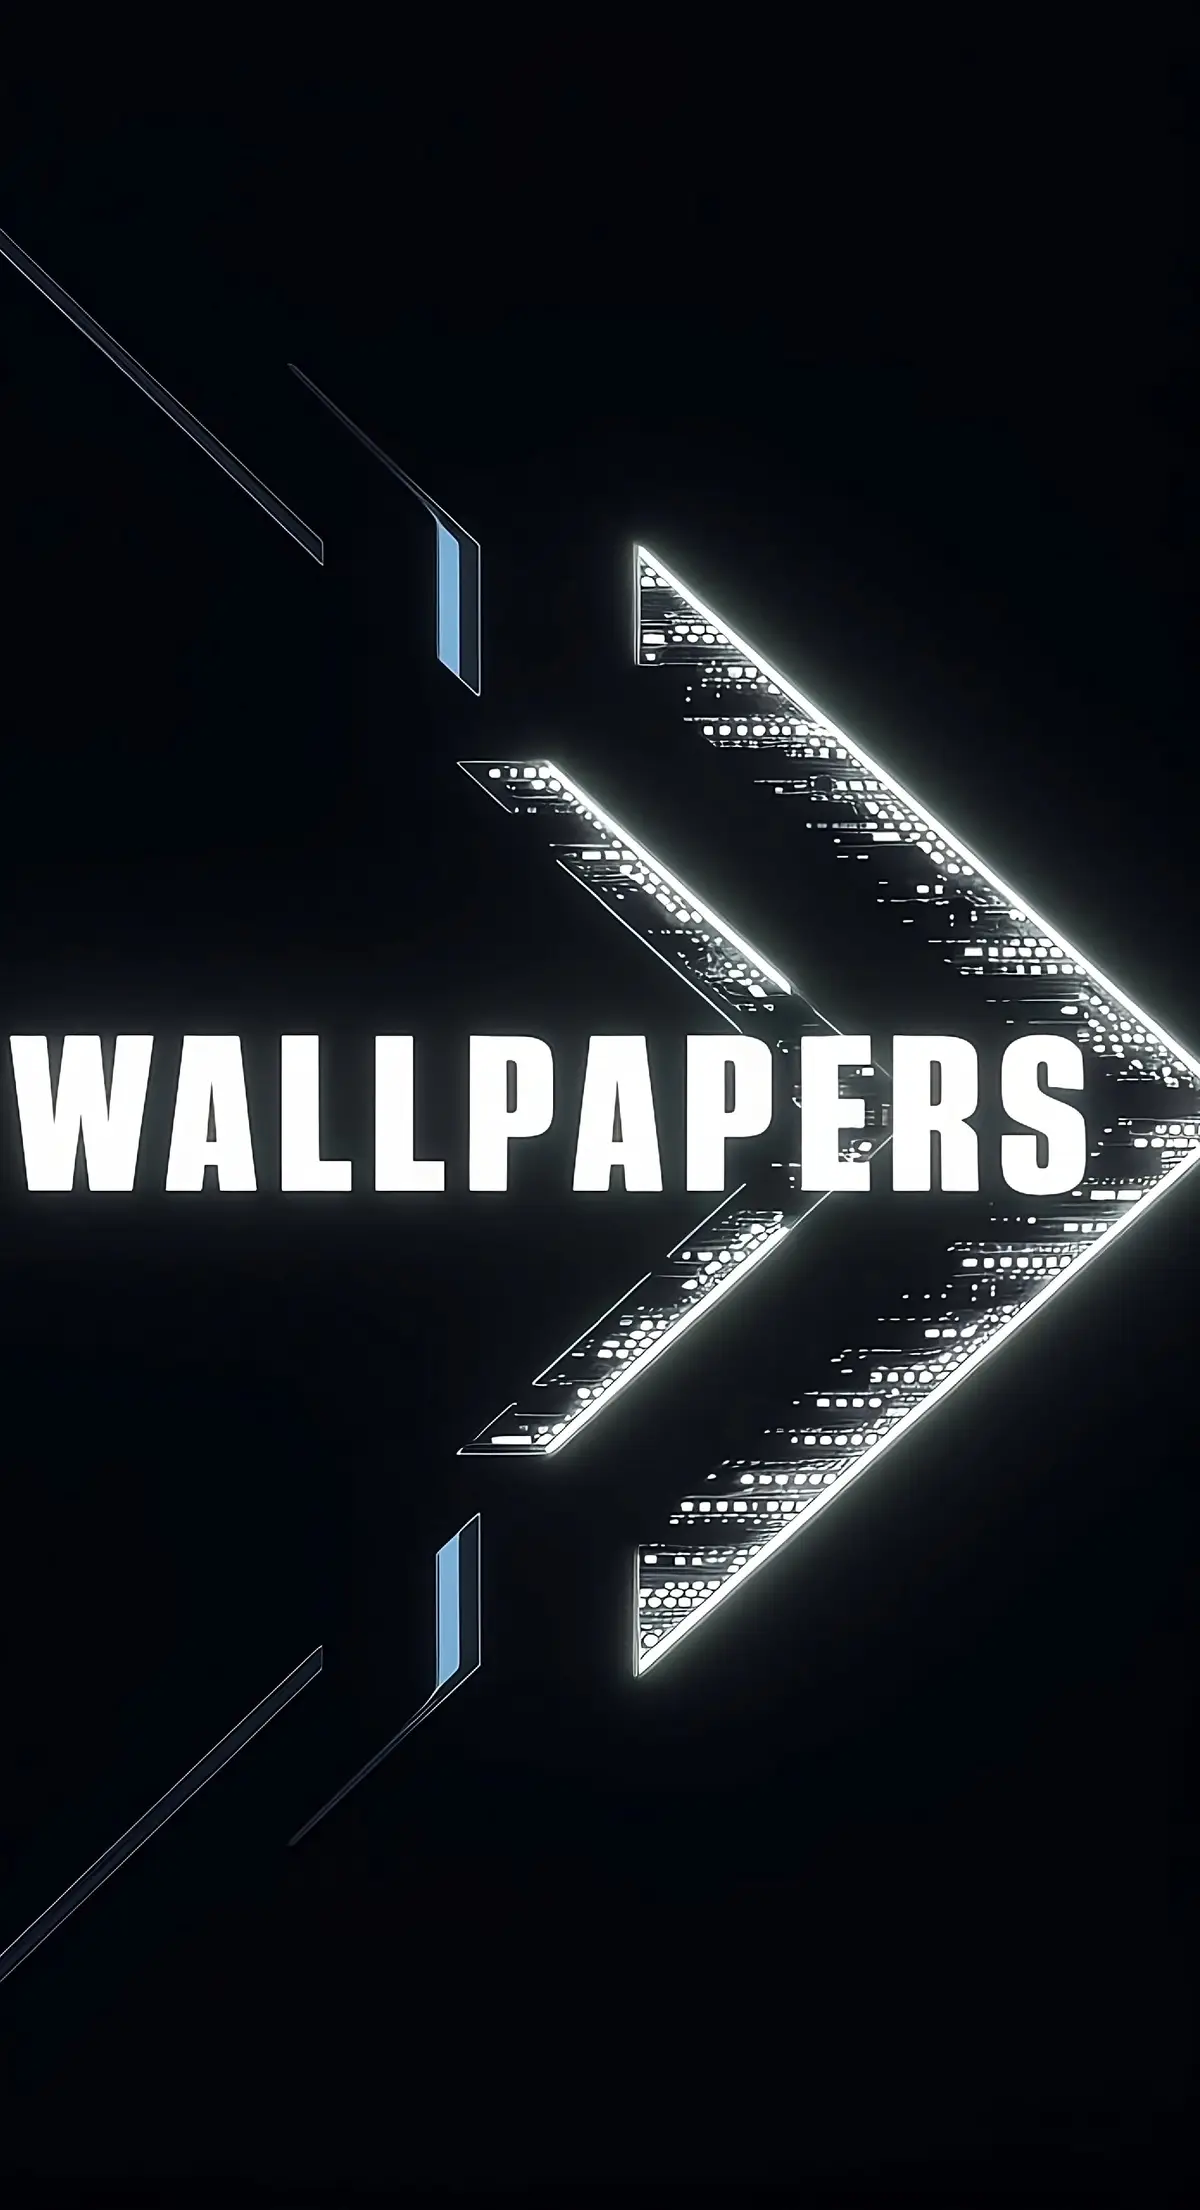 4K_WALLPAPERS #lockscreenwallpaper#8kwallpaper #hdwallpapers #4kultrahd #4kultrahd01 #wallpaper #lockscreen #newwallpaper #4kwallpaper #hdwallpaper #4kultrahd #foryou #foryoupage #viral #video #grow #grow #account